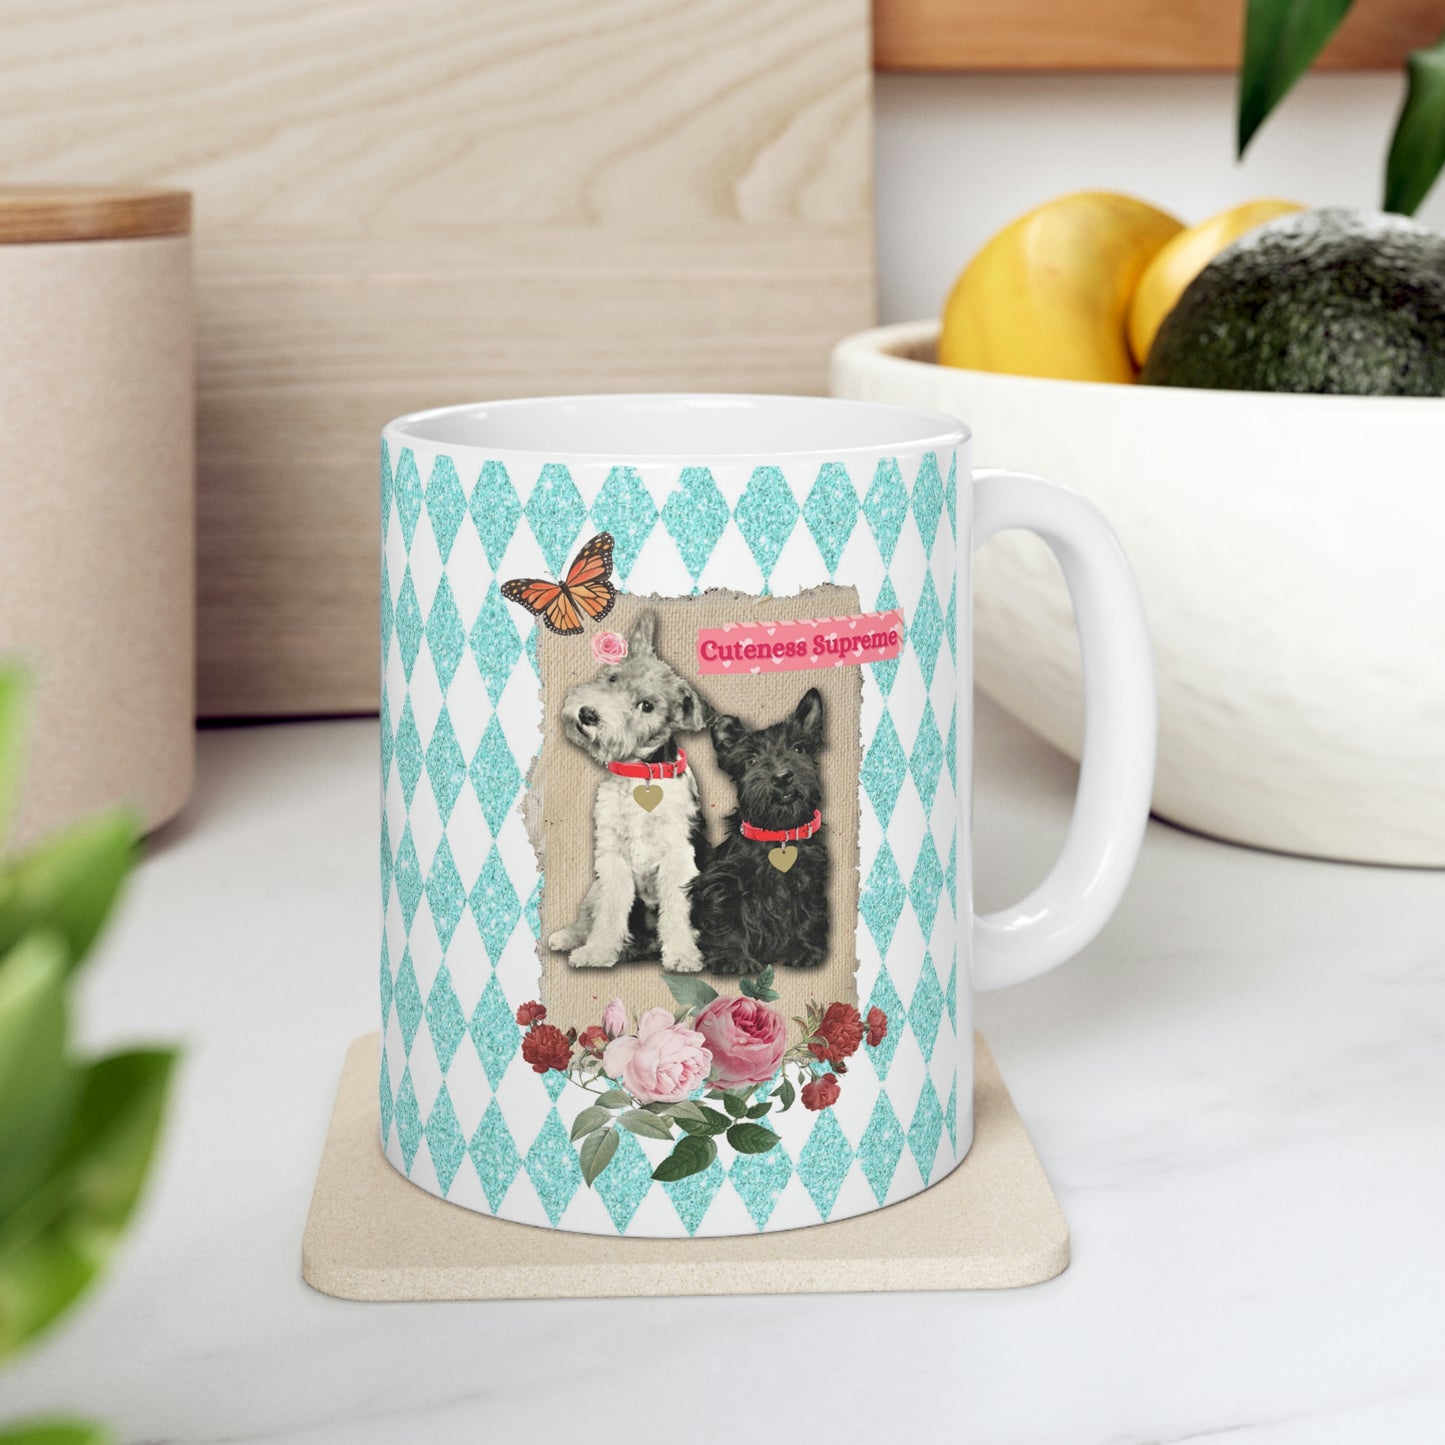 Super Cute, Jack Russell Terrier and Scotty Dog, Ceramic 11oz Mug, Pretty Aqua Harlequin Glitter Print, Roses, Vintage Mixed Media Graphic